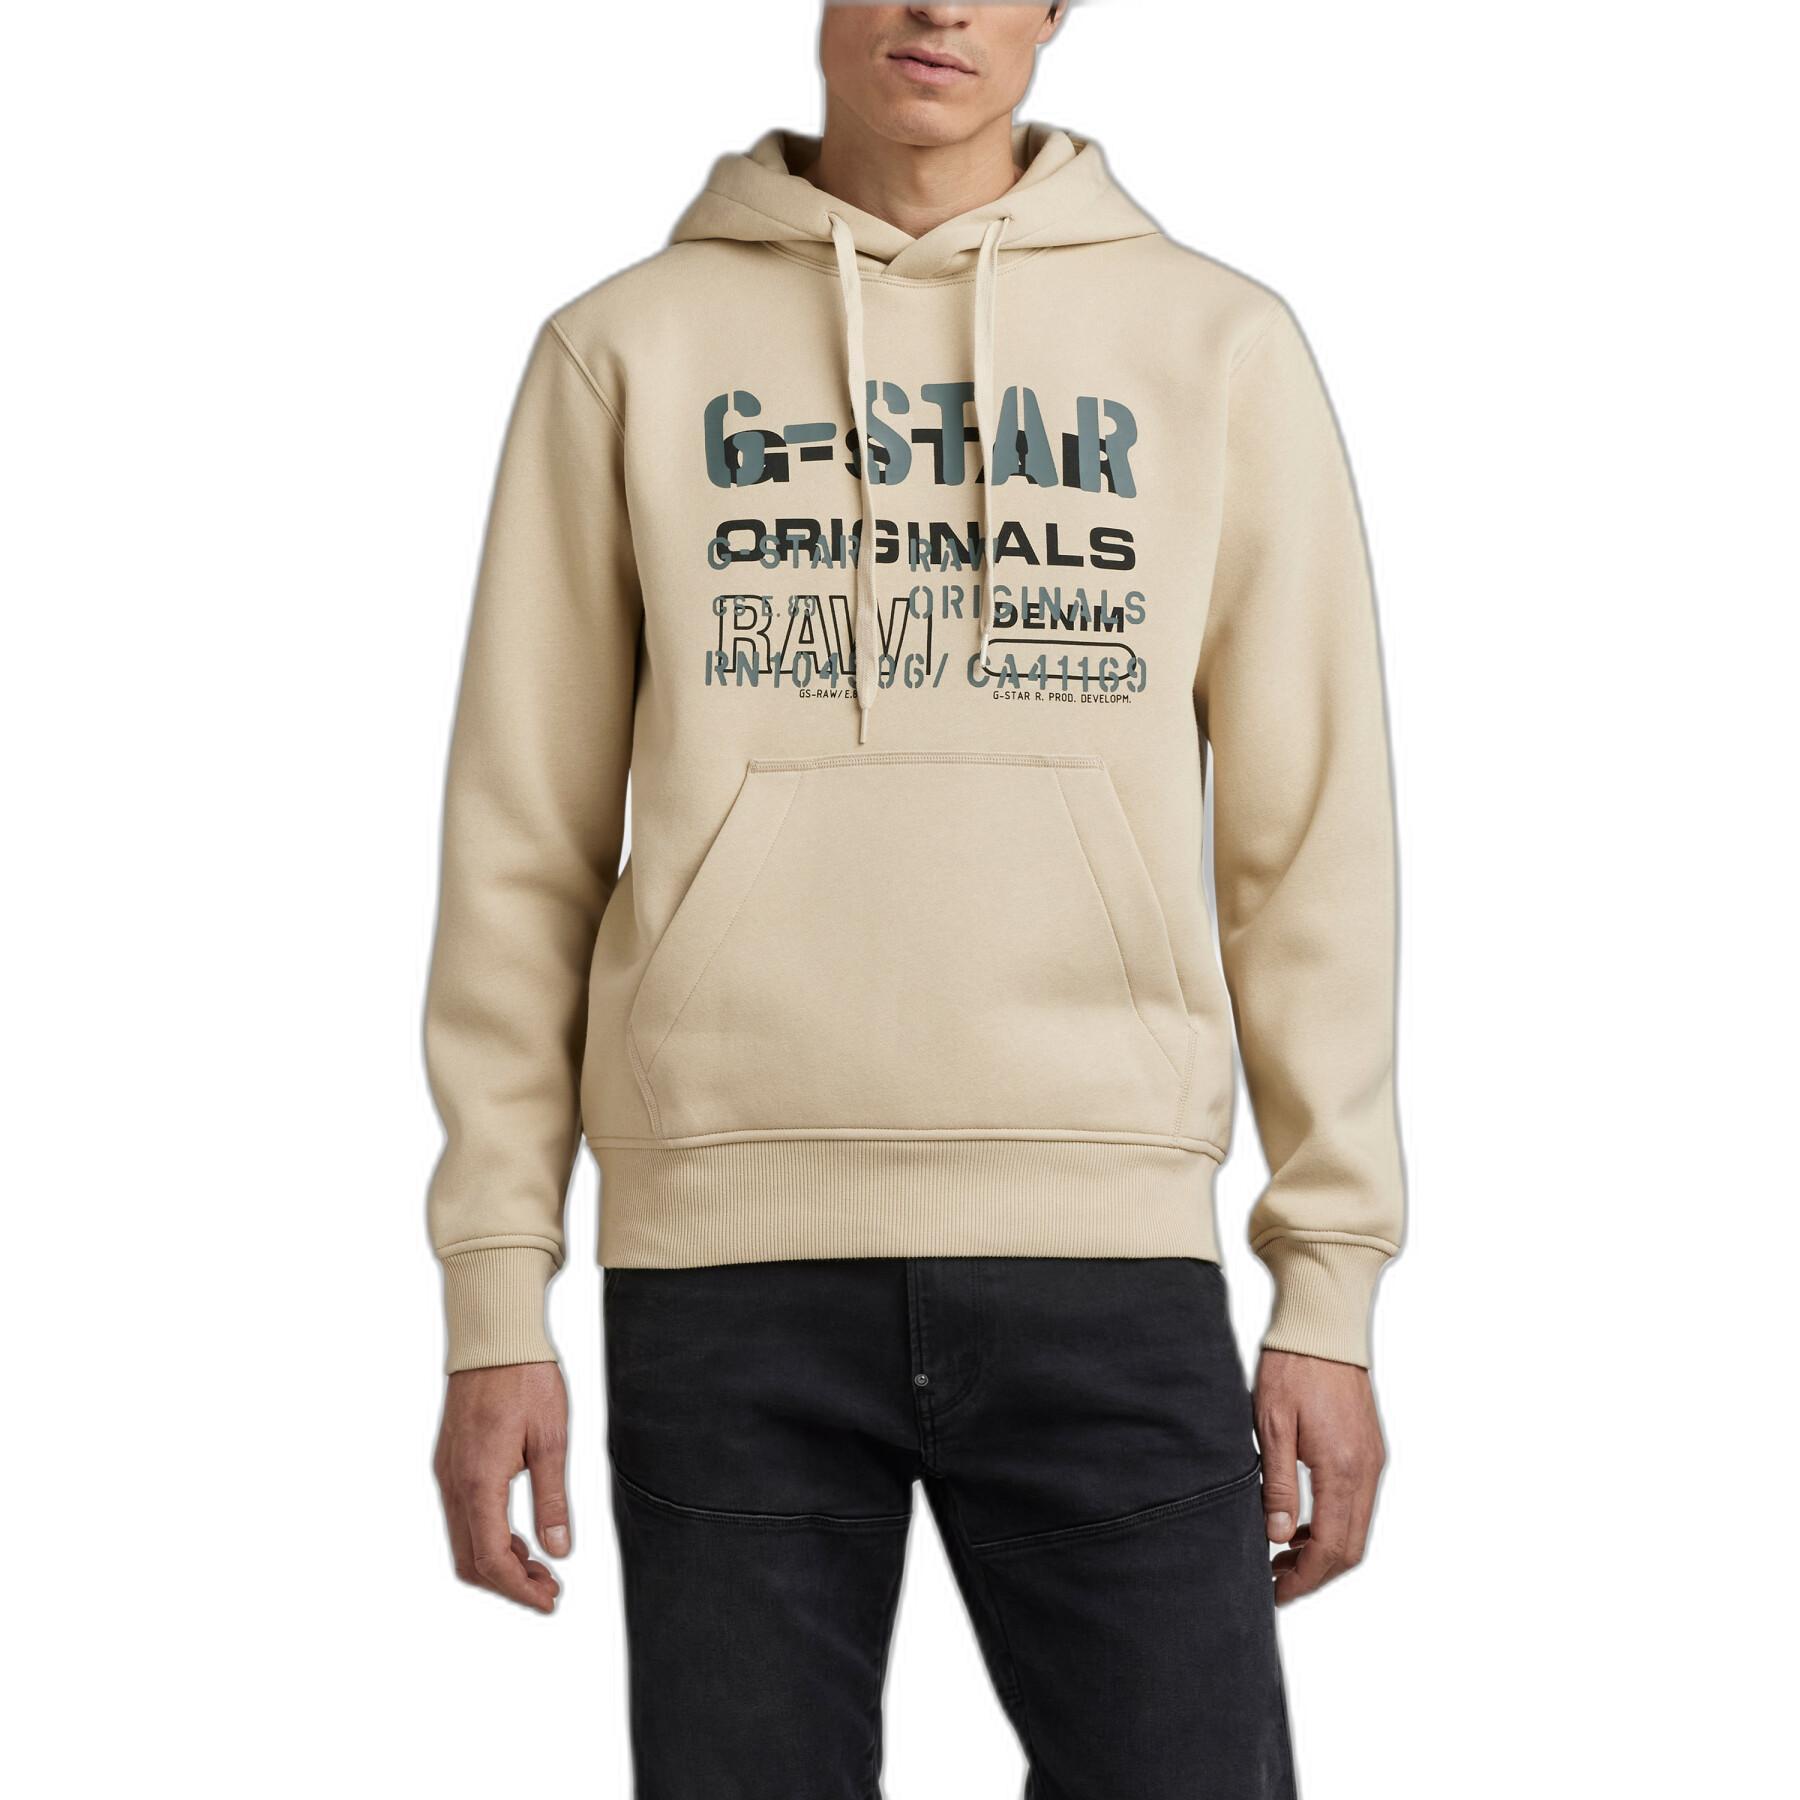 Hooded sweatshirt G-Star Multi layer originals